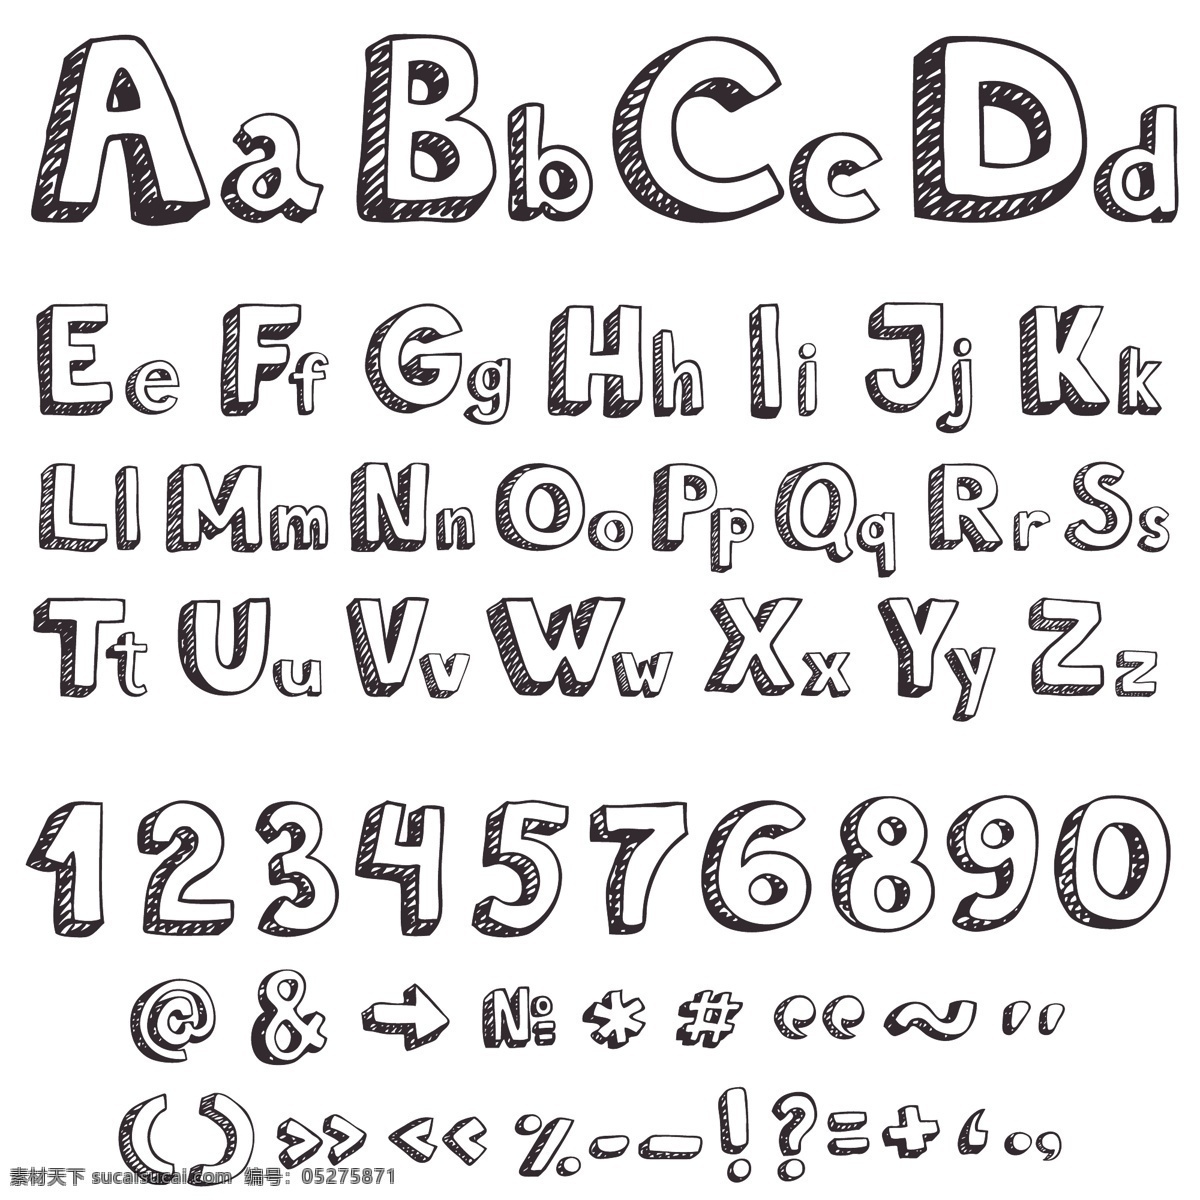 3d 立体 英文 字体 阴影 手写 手绘 涂鸦 蜡笔 粉笔 字母 符号 其他设计 矢量